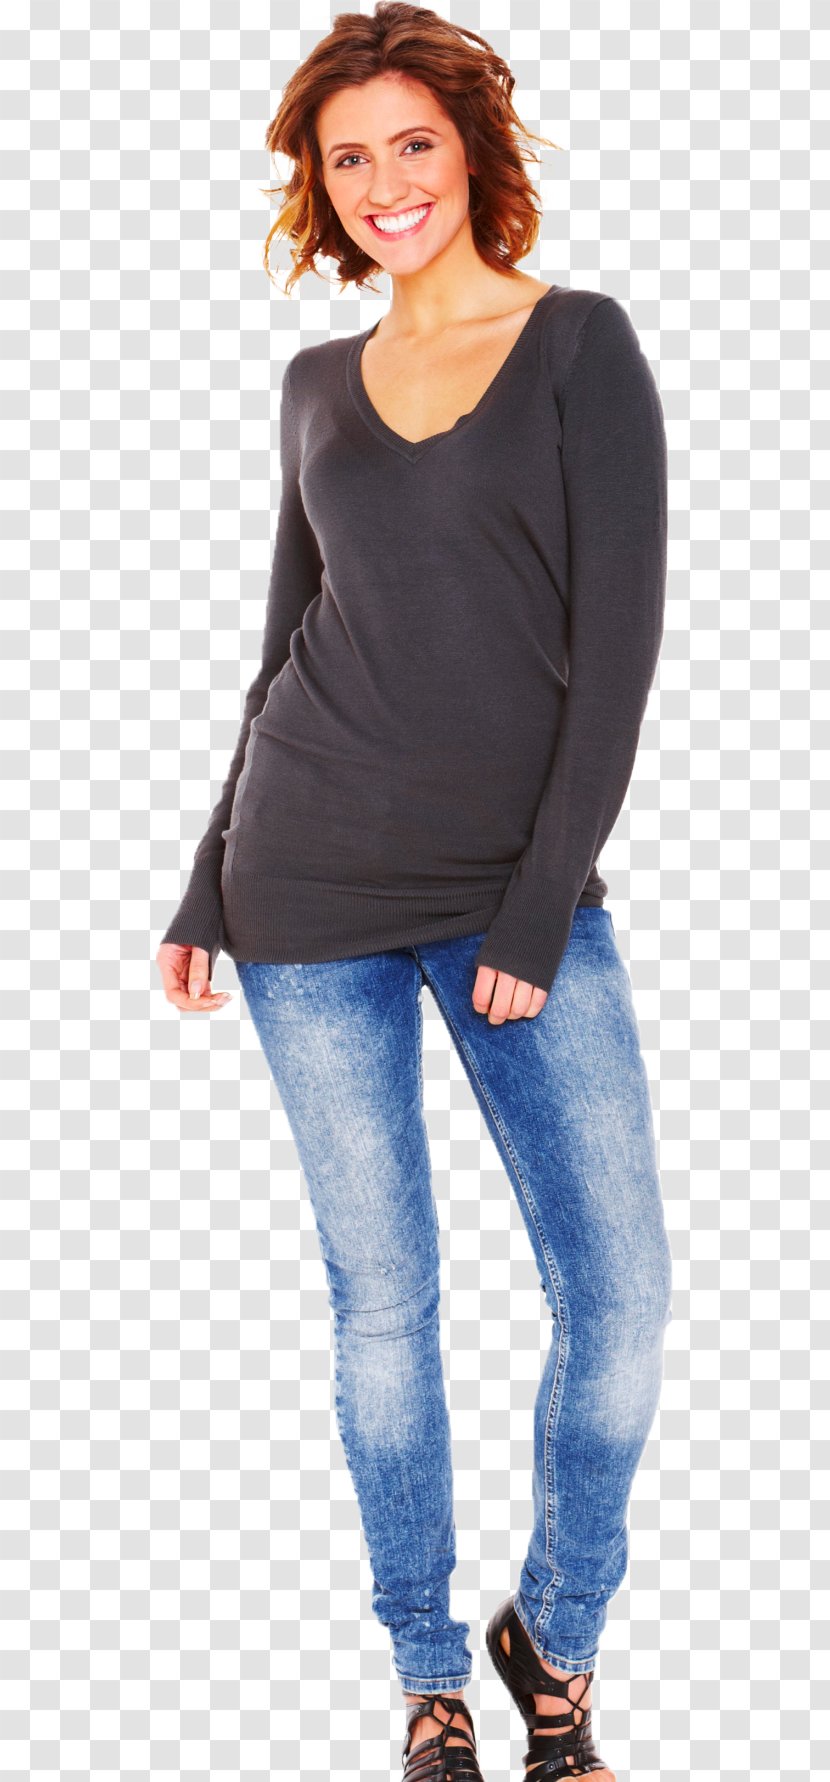 Woman Jeans ISOCYCLE SAS - Informal Attire Transparent PNG